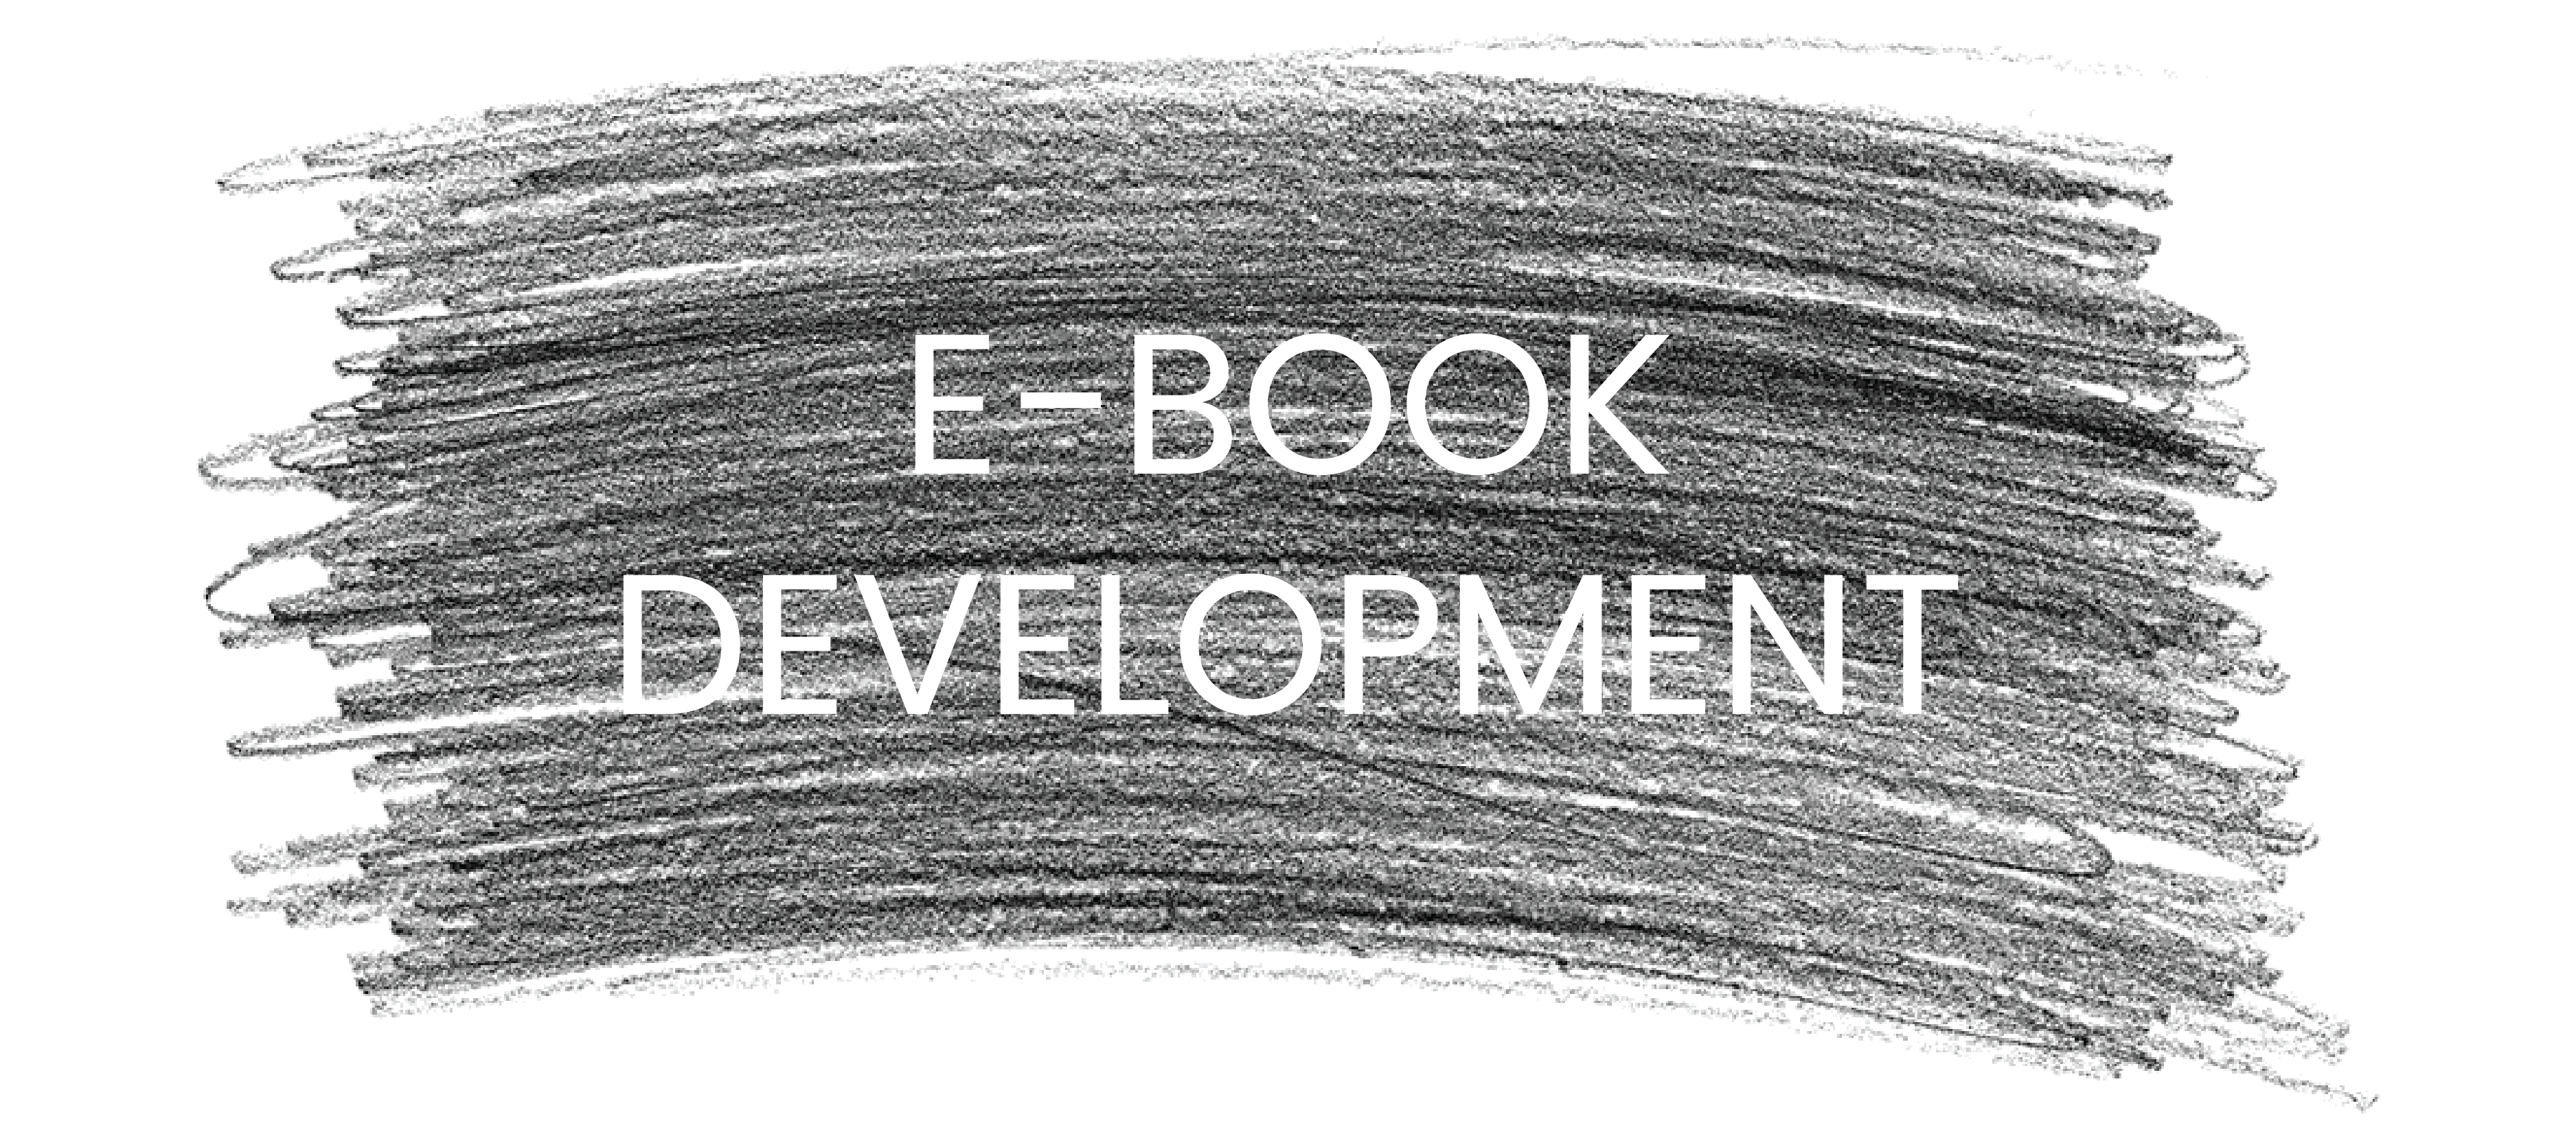 Services_pub-ebook-development